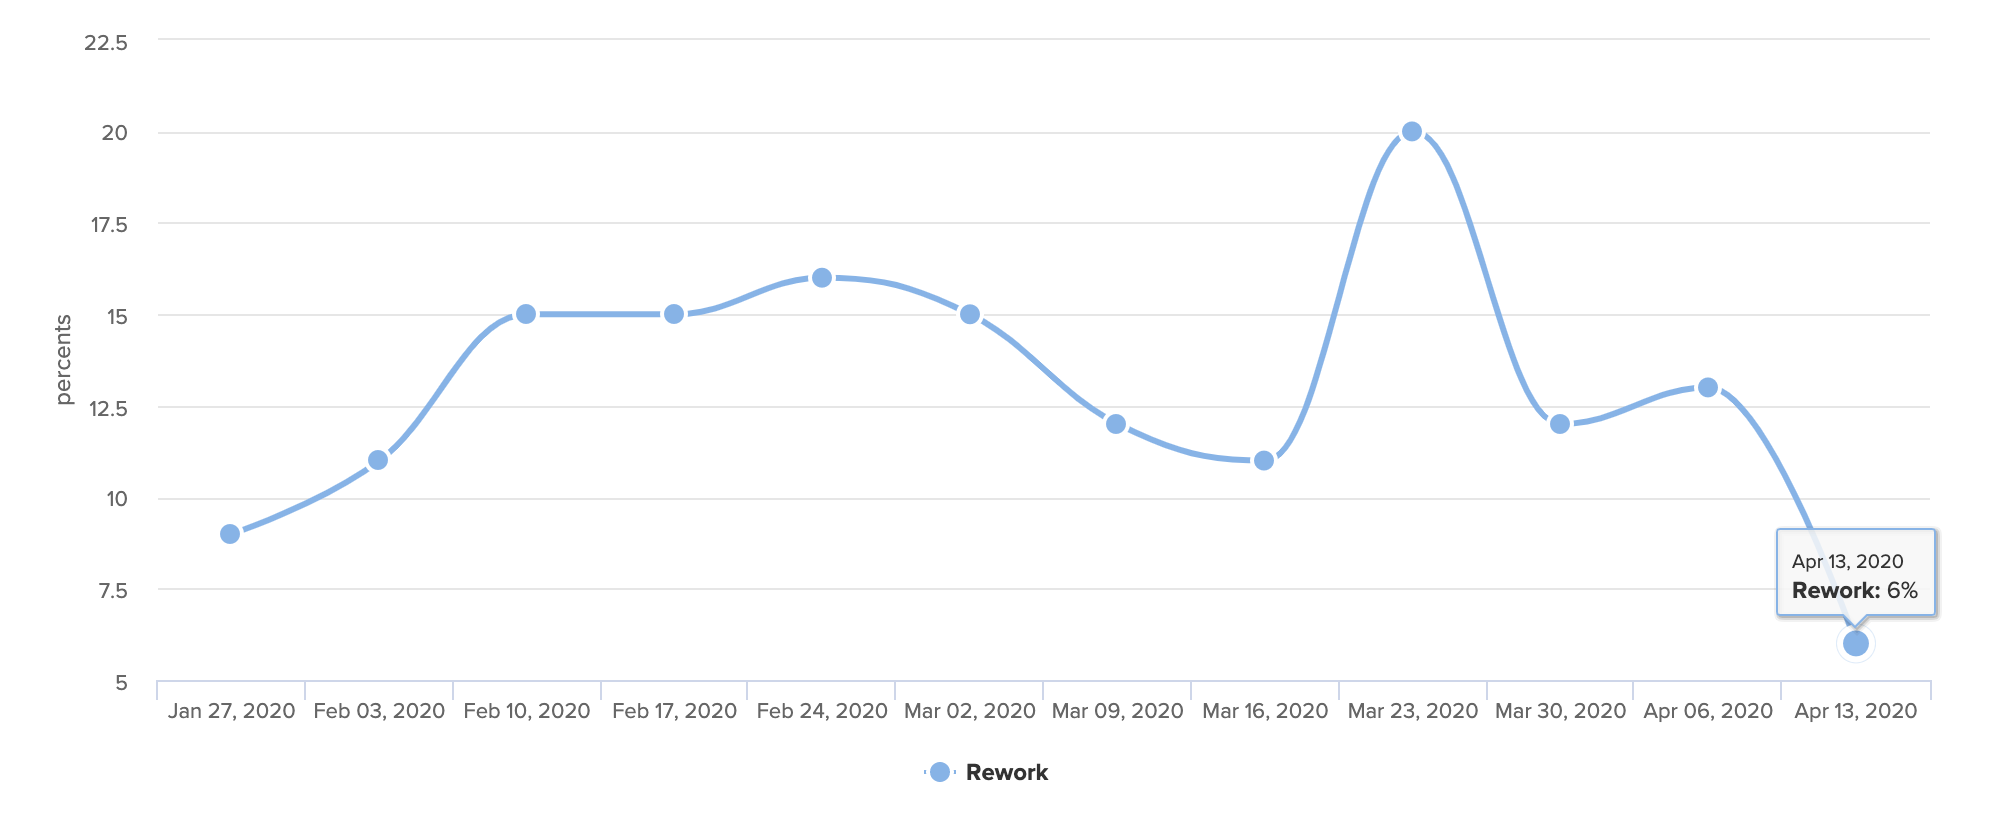 Decreasing Rework Trendline